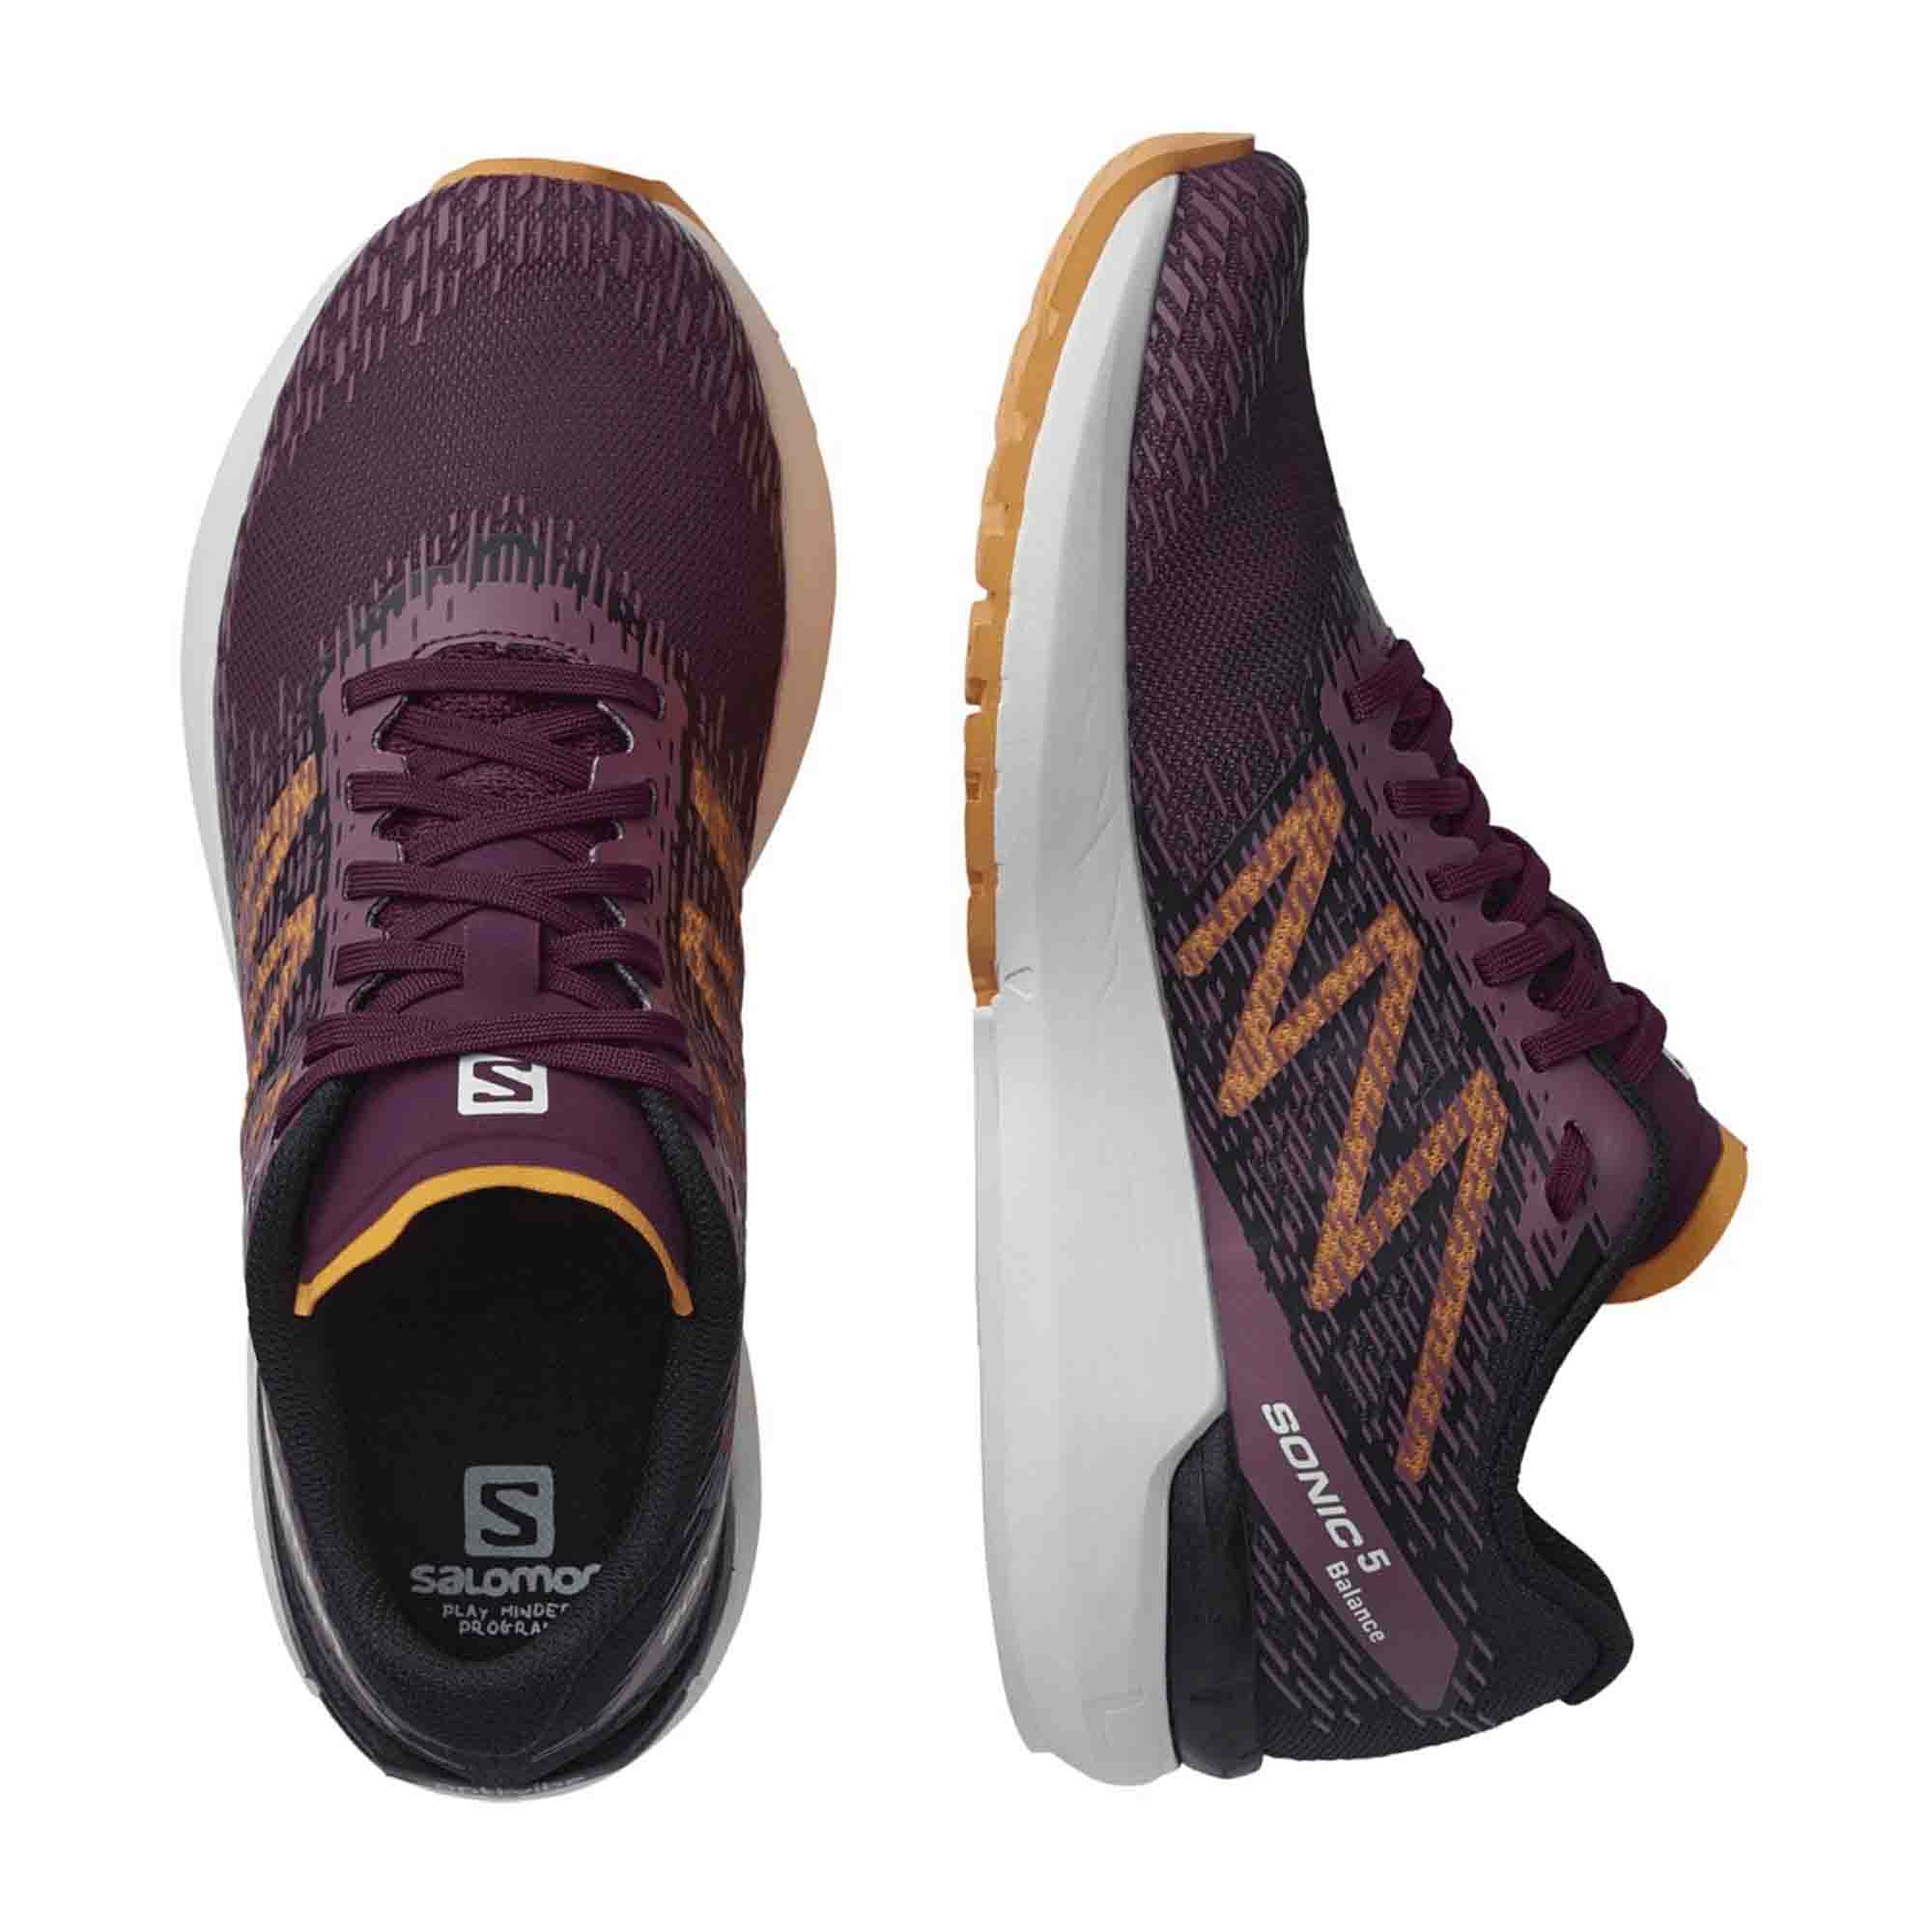 Salomon shoes SONIC 5 Balance W Grape for women, purple